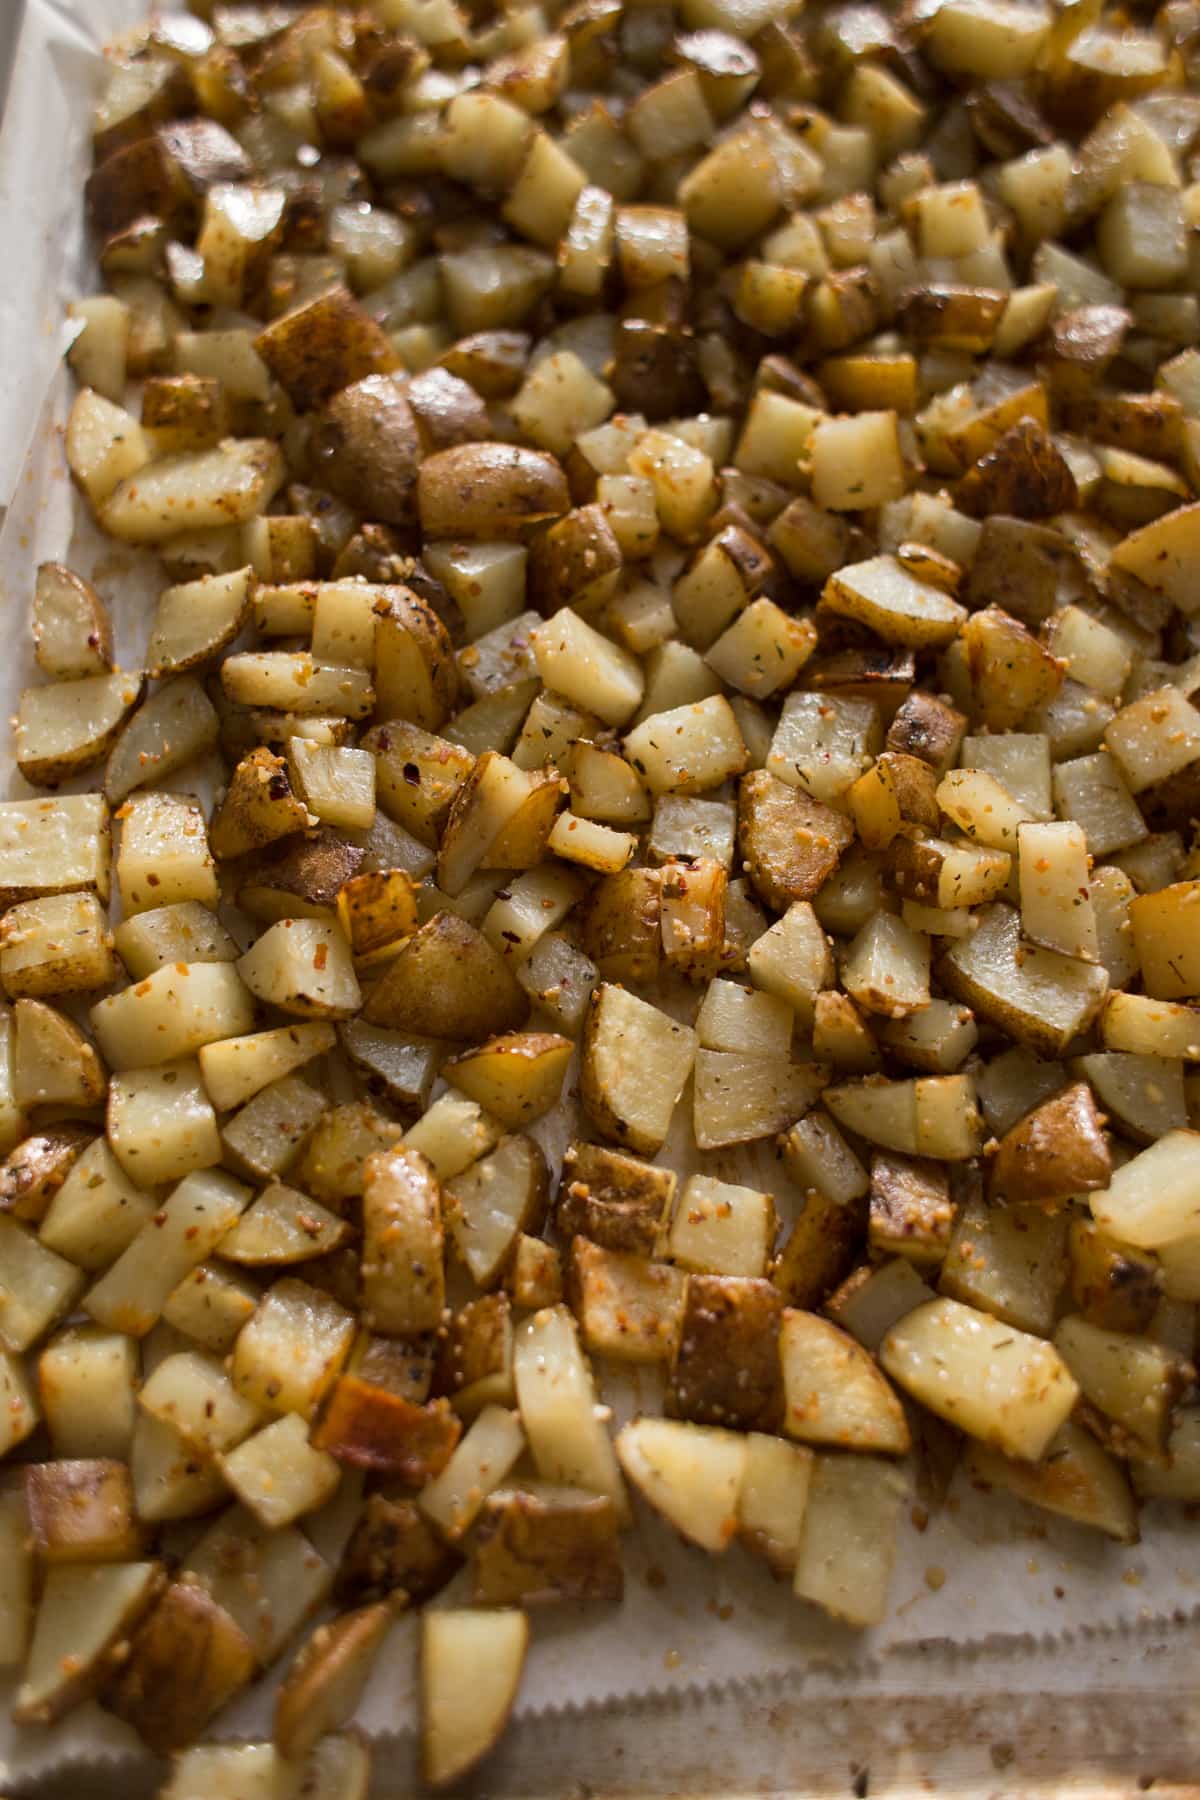 roasted potatoes 2